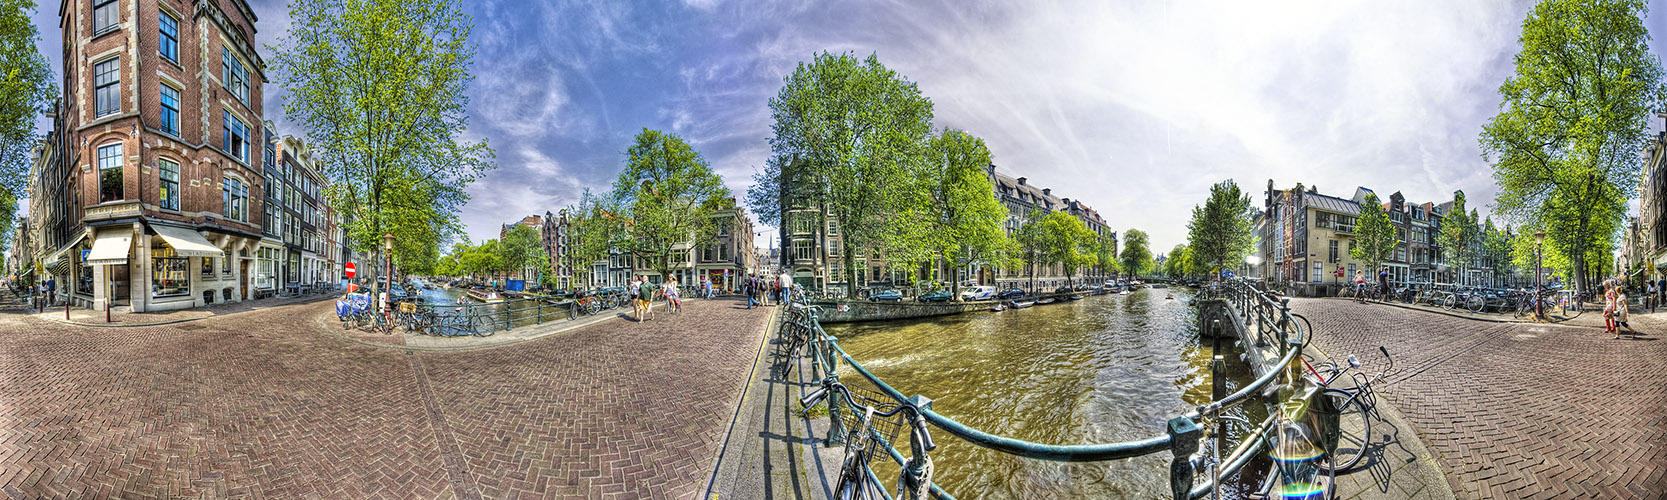 Amsterdam Pano HDR1 03 Herengracht